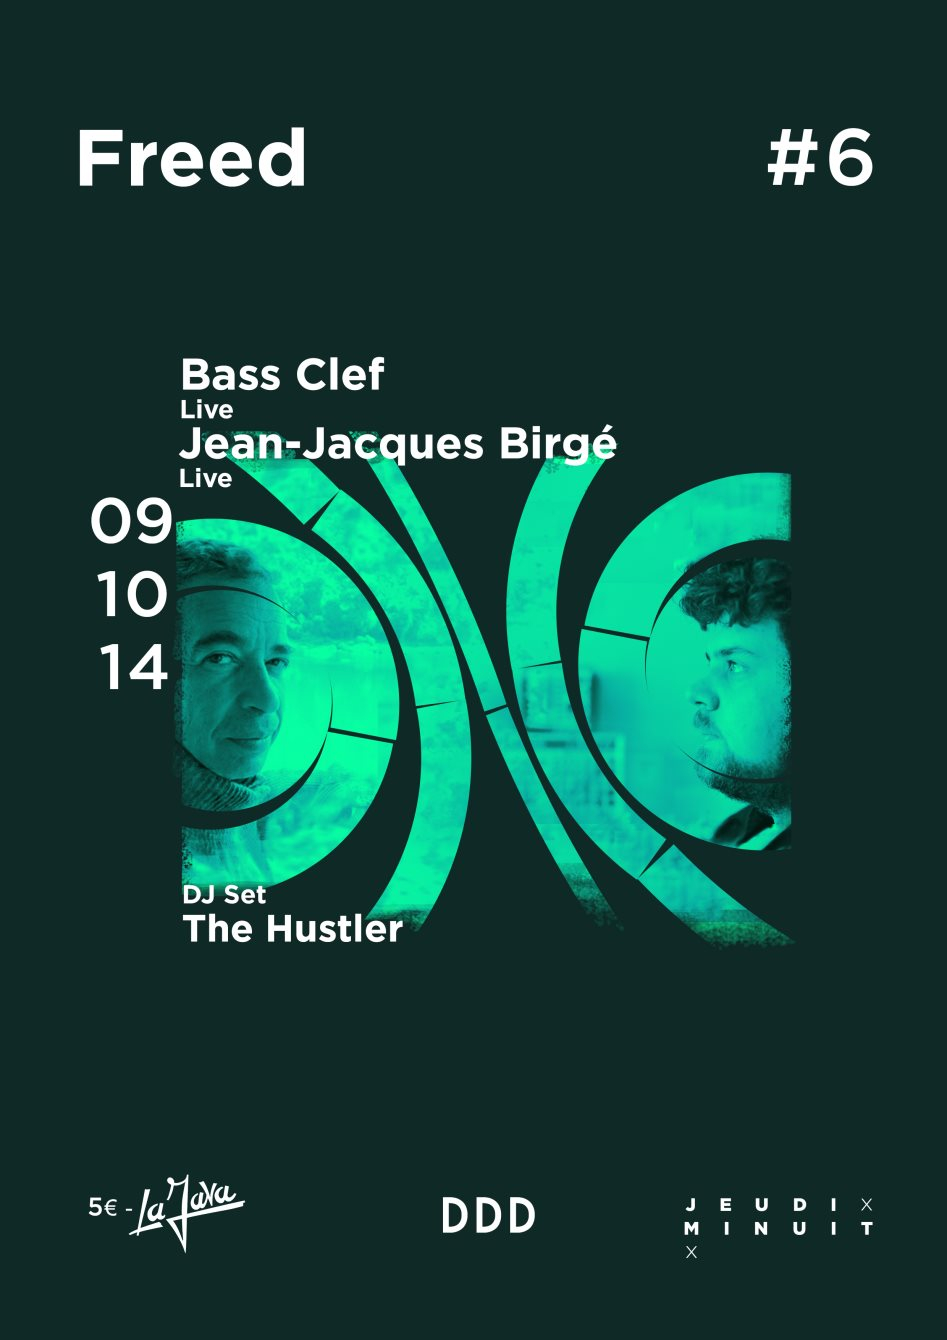 Freed - Jeudi Minuit with Bass Clef (Live), Jean-Jacques Birgé, The Hustler - Flyer front